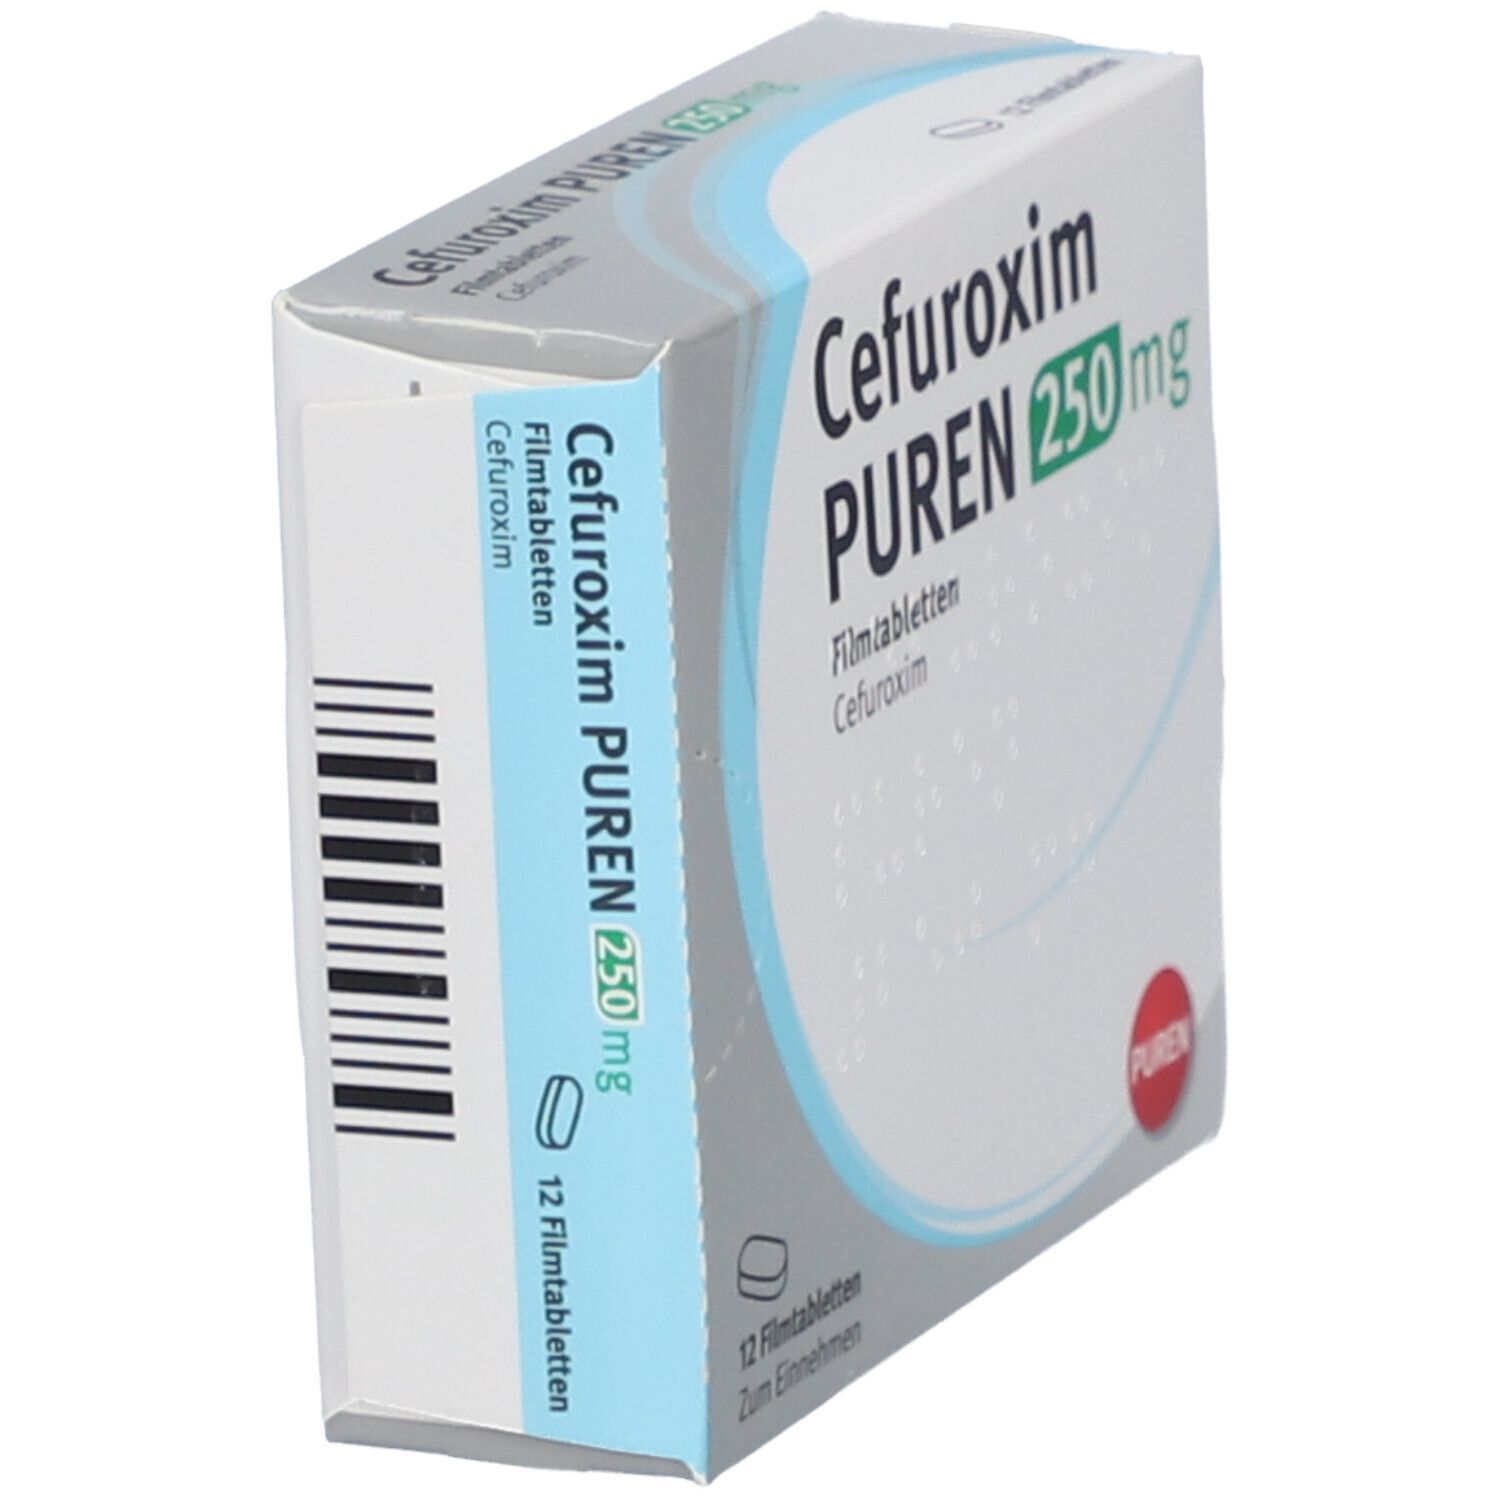 Cefuroxim PUREN 250 mg